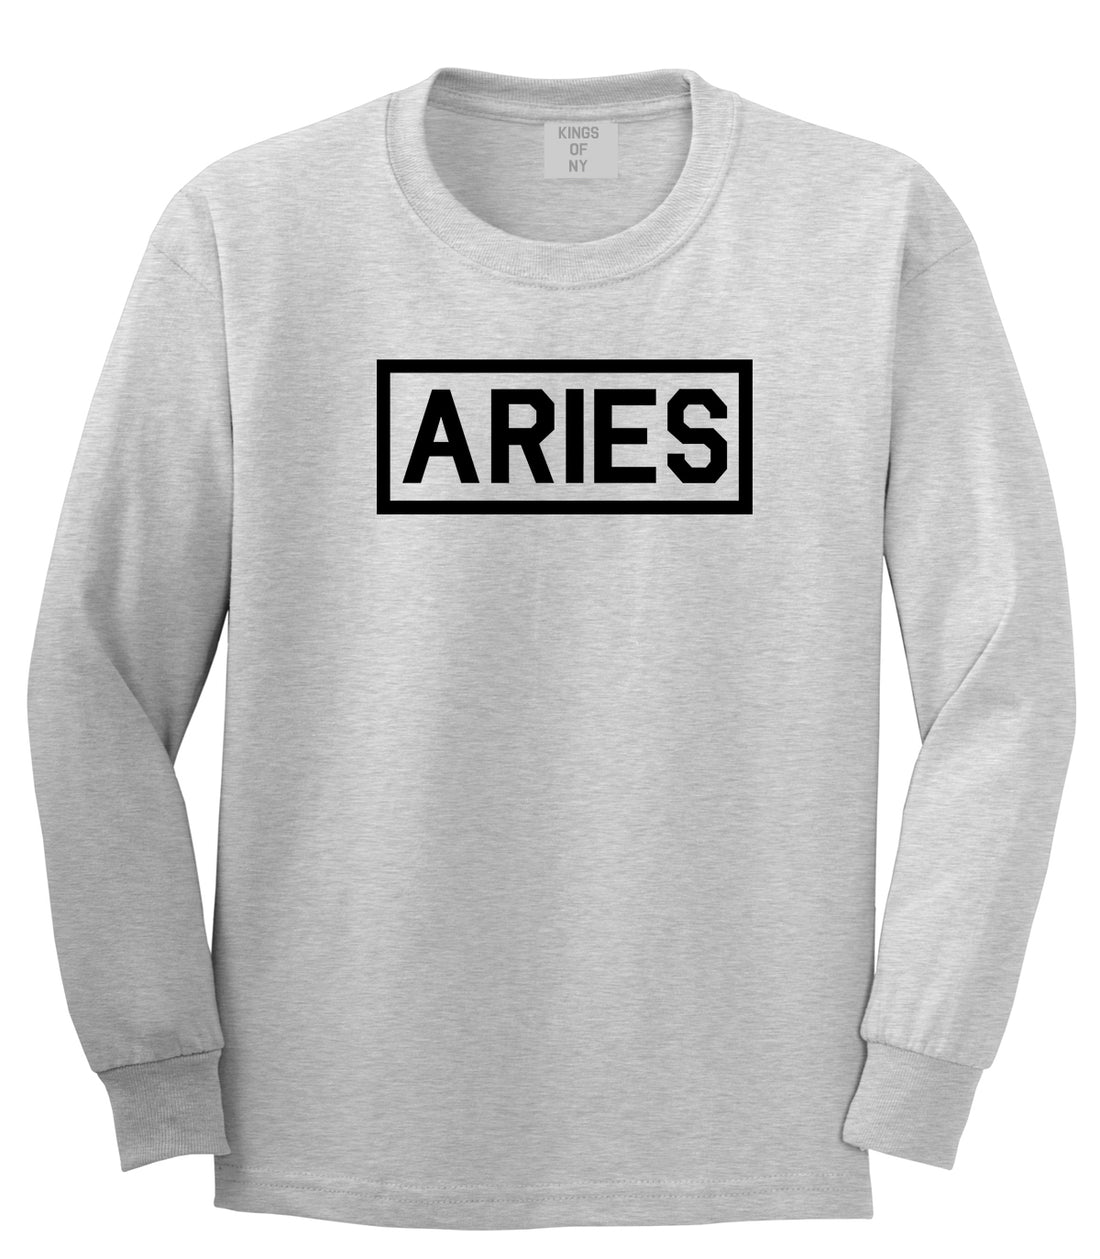 Aries Horoscope Sign Mens Grey Long Sleeve T-Shirt by KINGS OF NY